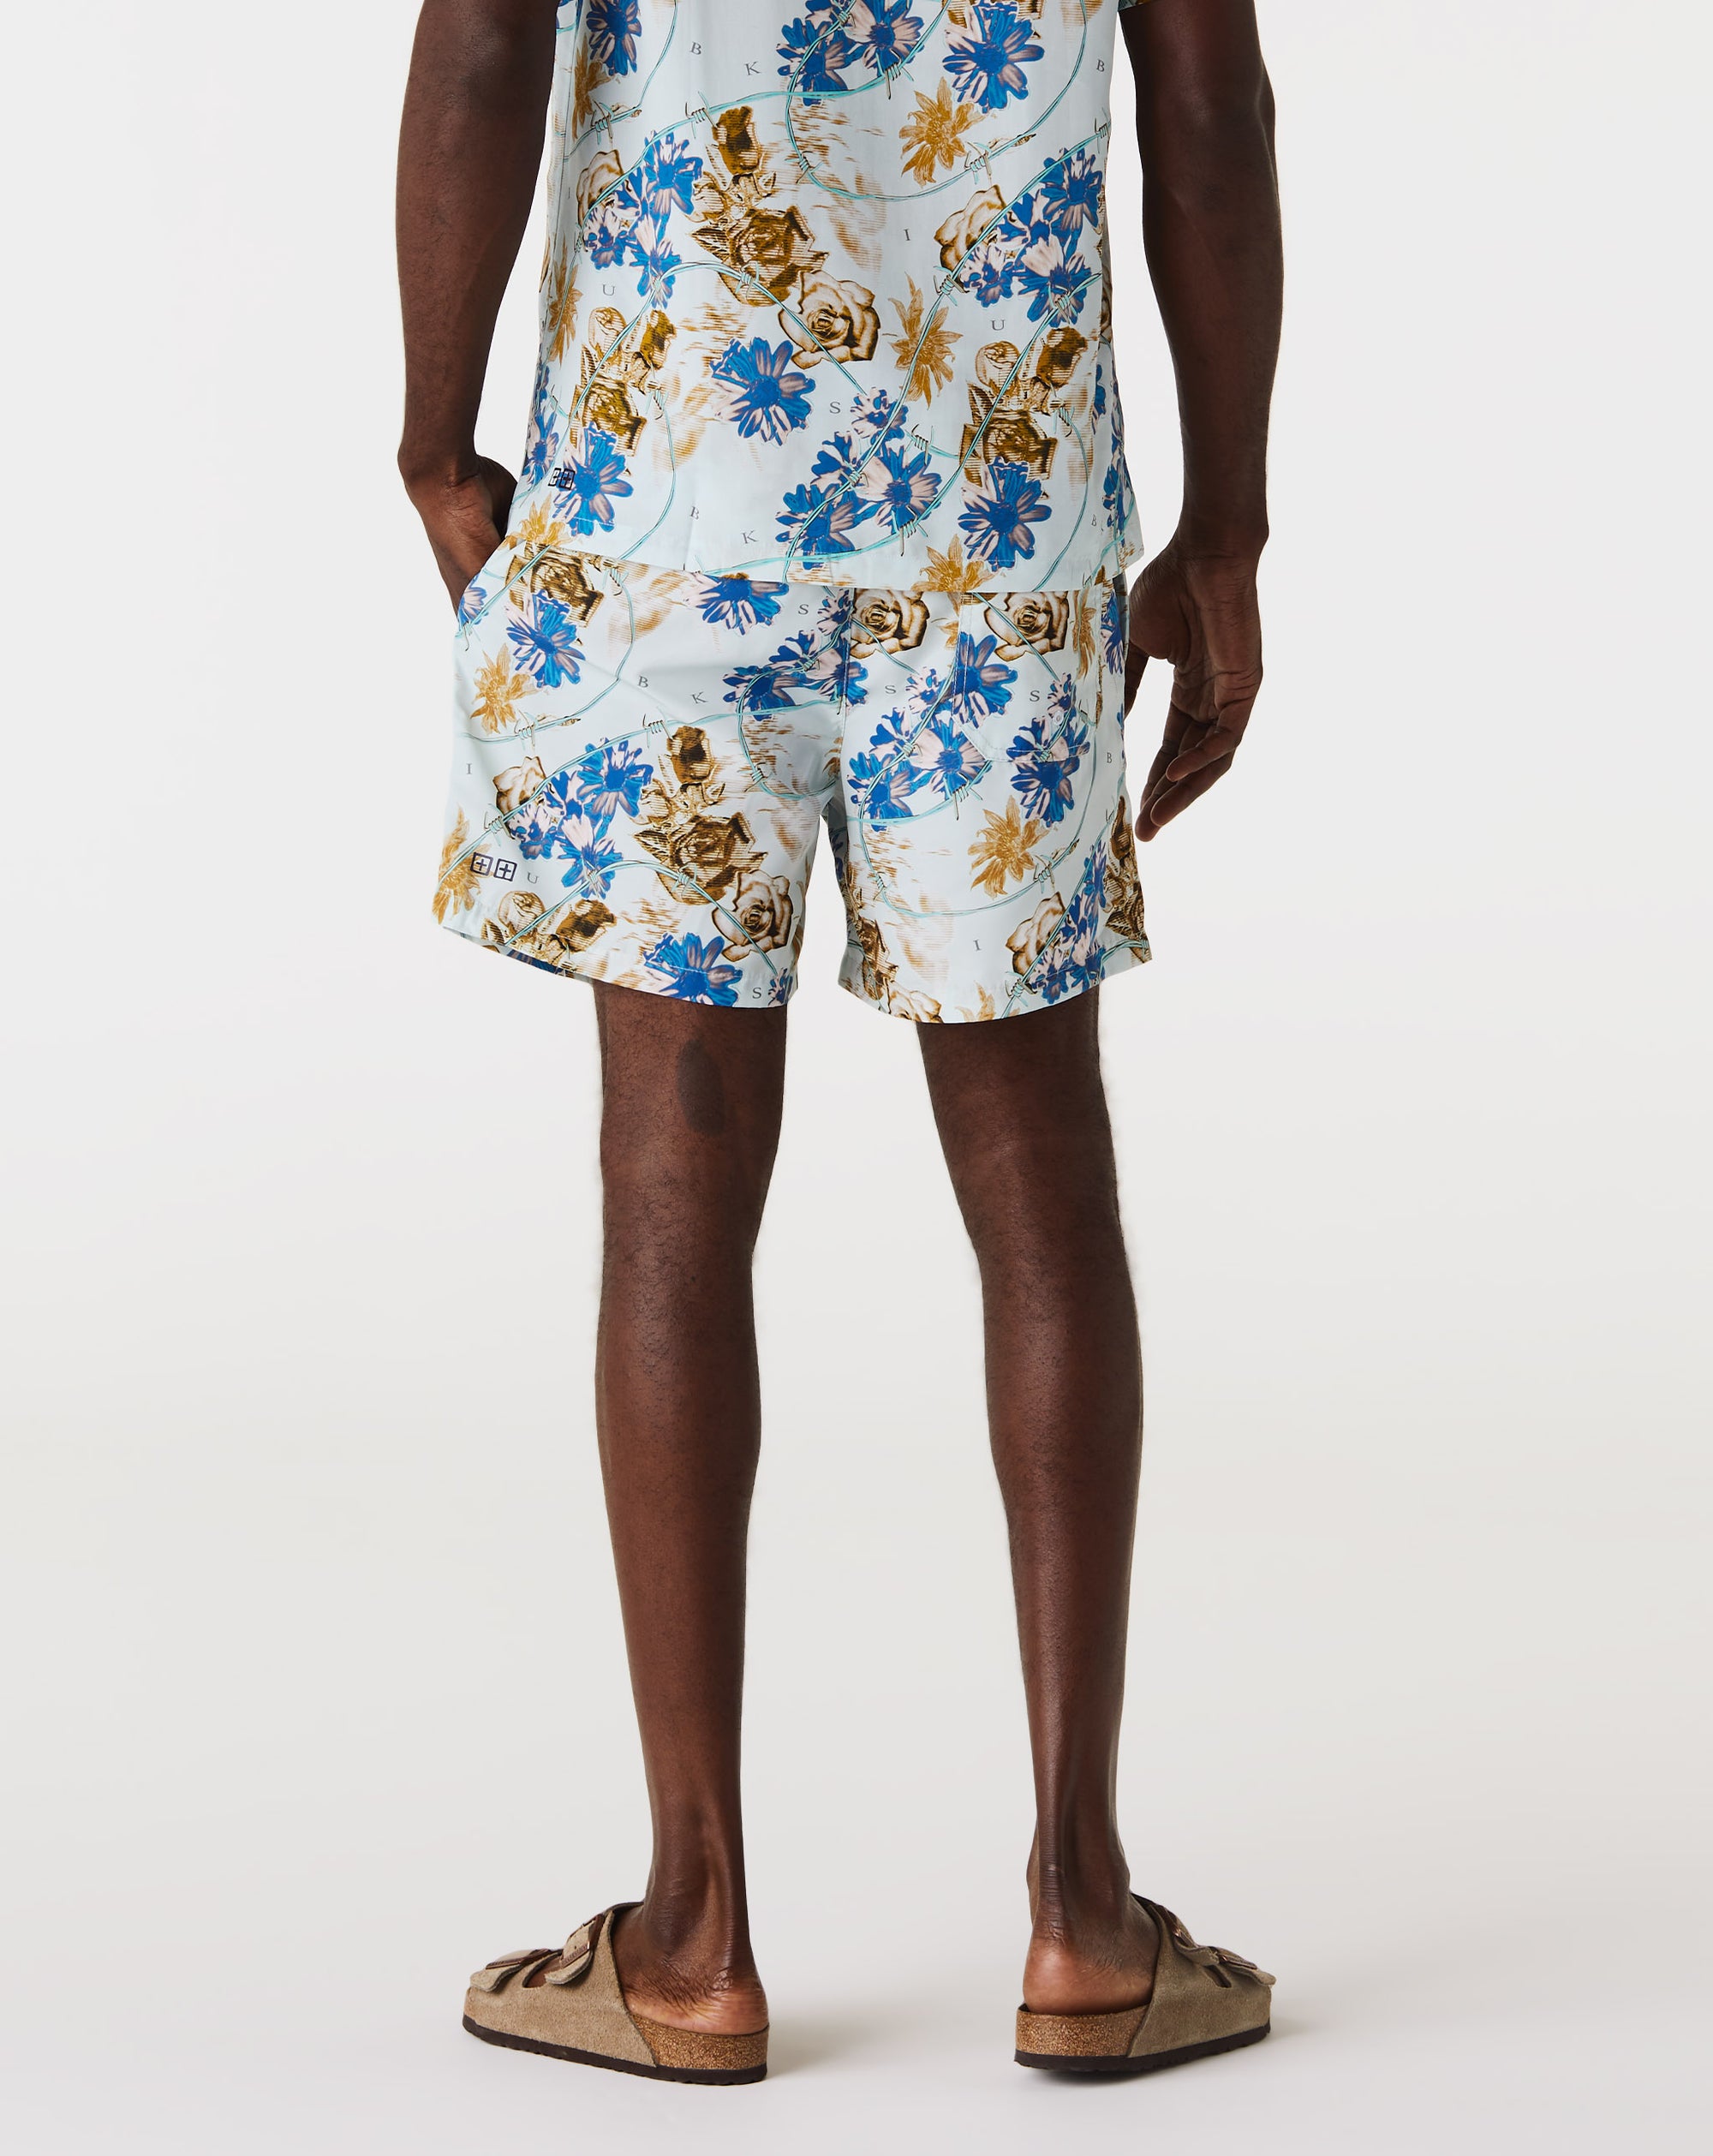 Ksubi Floralist Boardshorts - Rule of Next Apparel